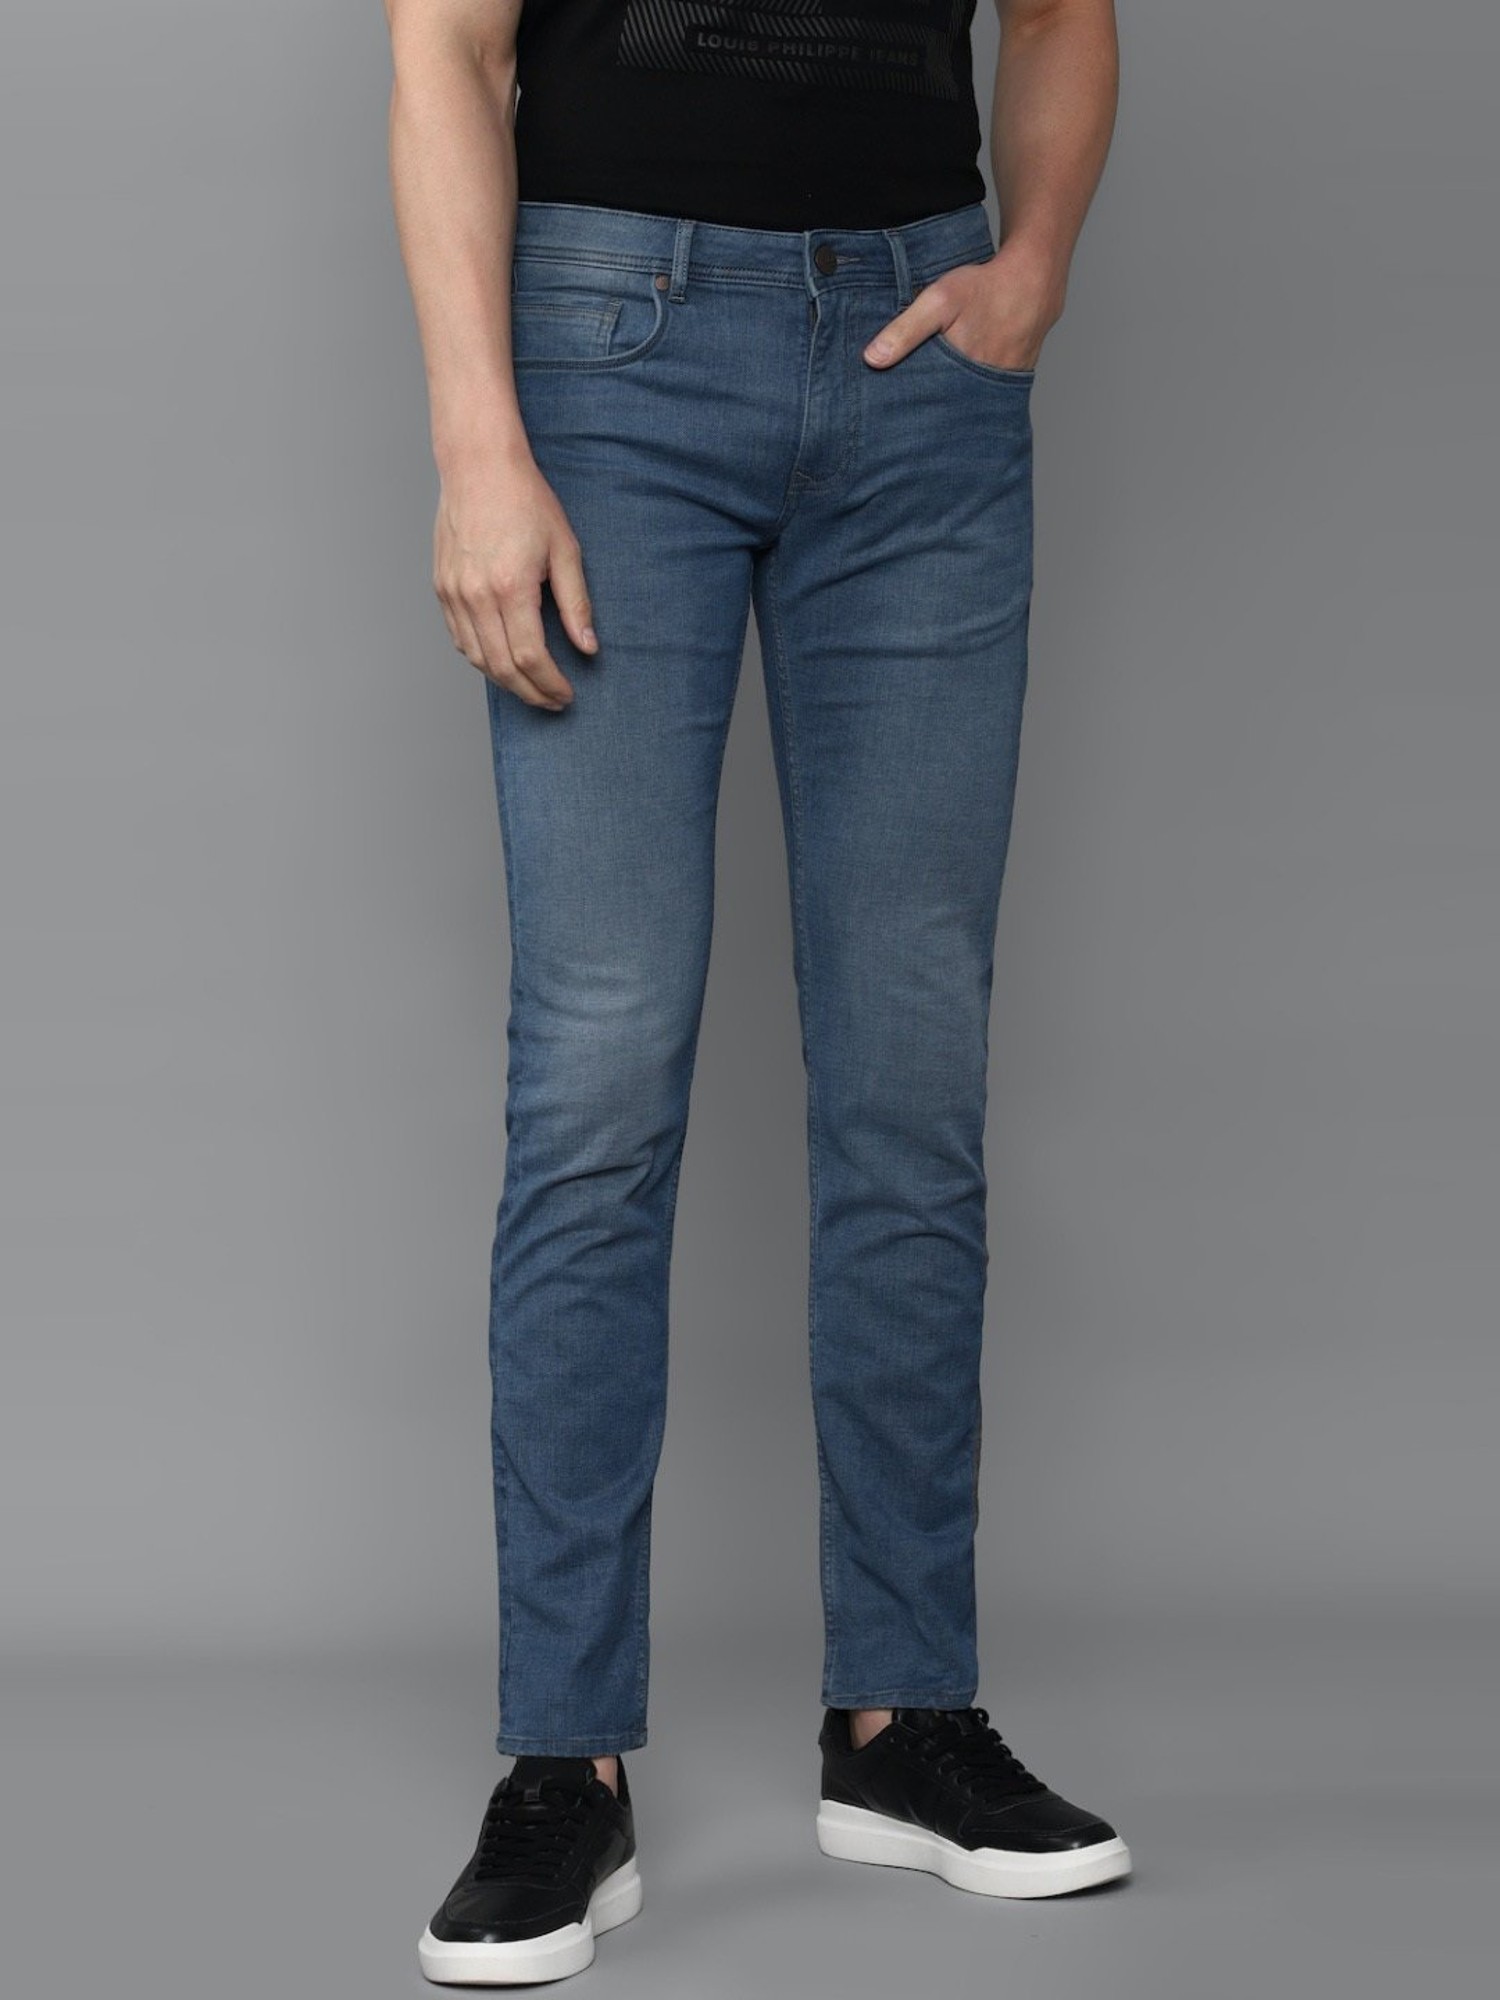 Louis Philippe Jeans Slim Men Dark Blue Jeans - Buy Louis Philippe Jeans  Slim Men Dark Blue Jeans Online at Best Prices in India | Flipkart.com